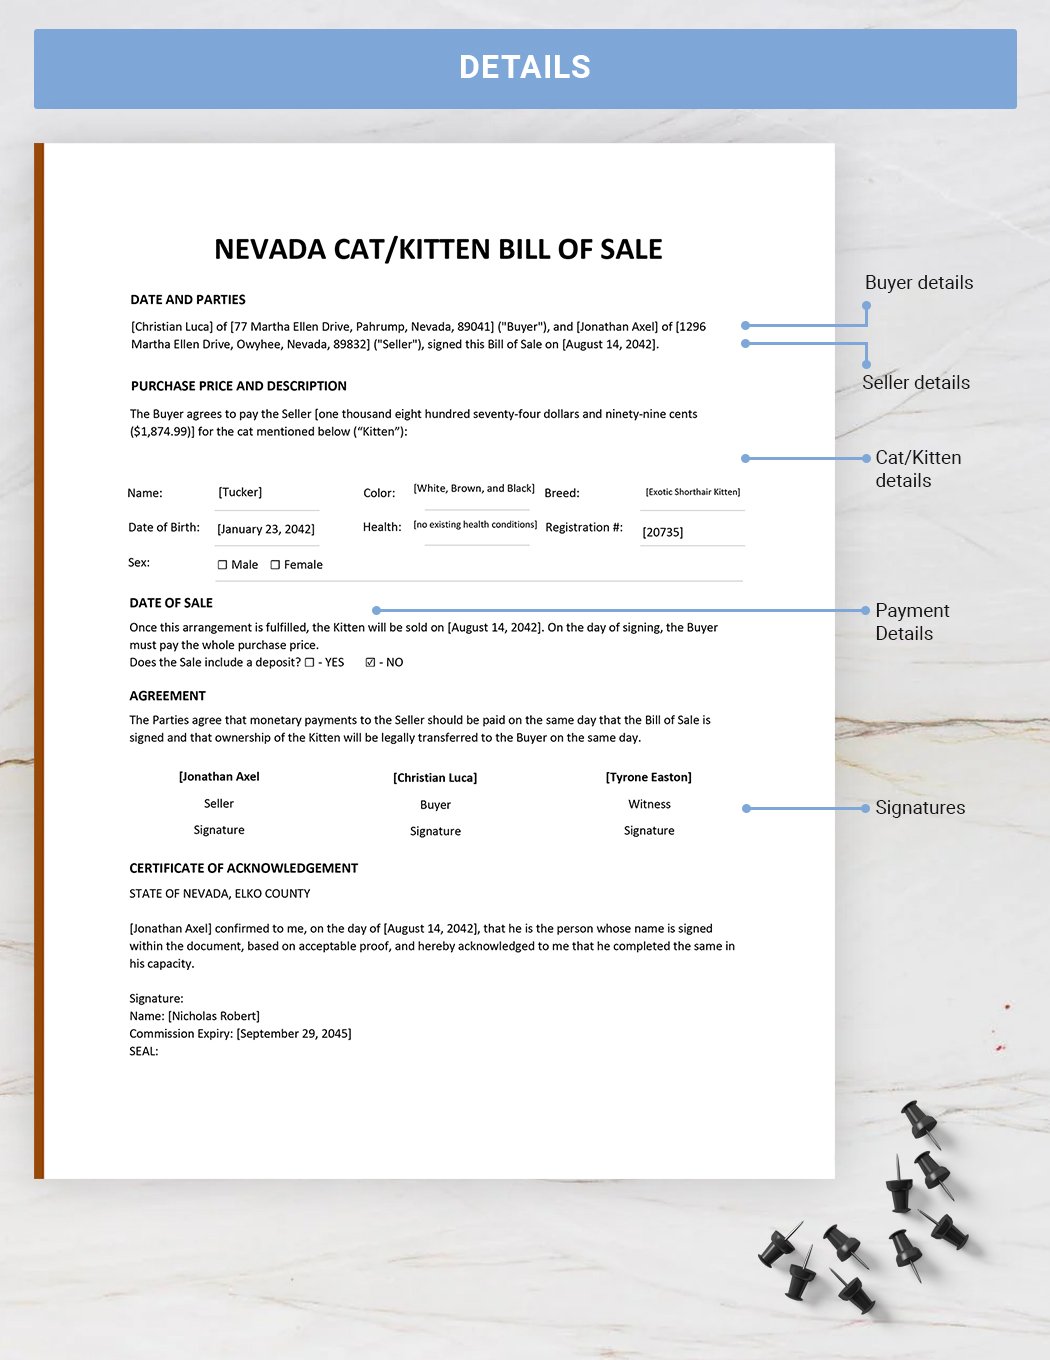 Nevada Cat / Kitten Bill of Sale Template